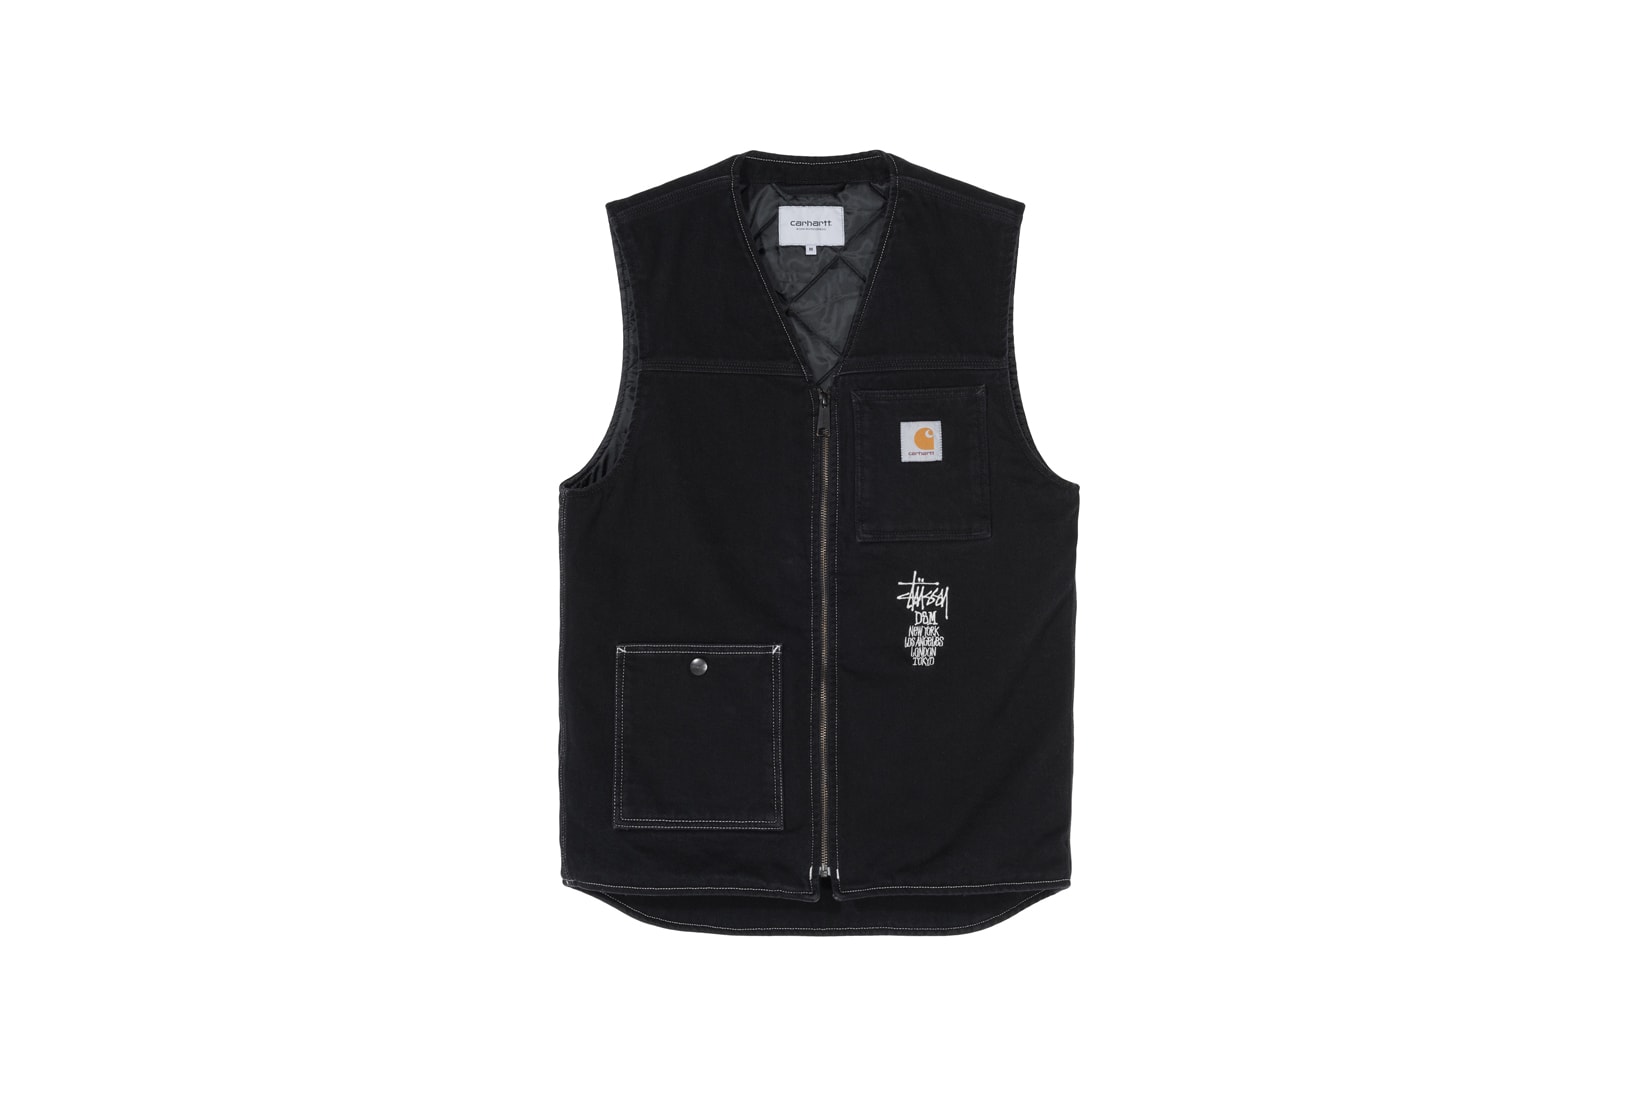 Stussy x Carharrt WIP x Dover Street Market Collaboration Vest Black